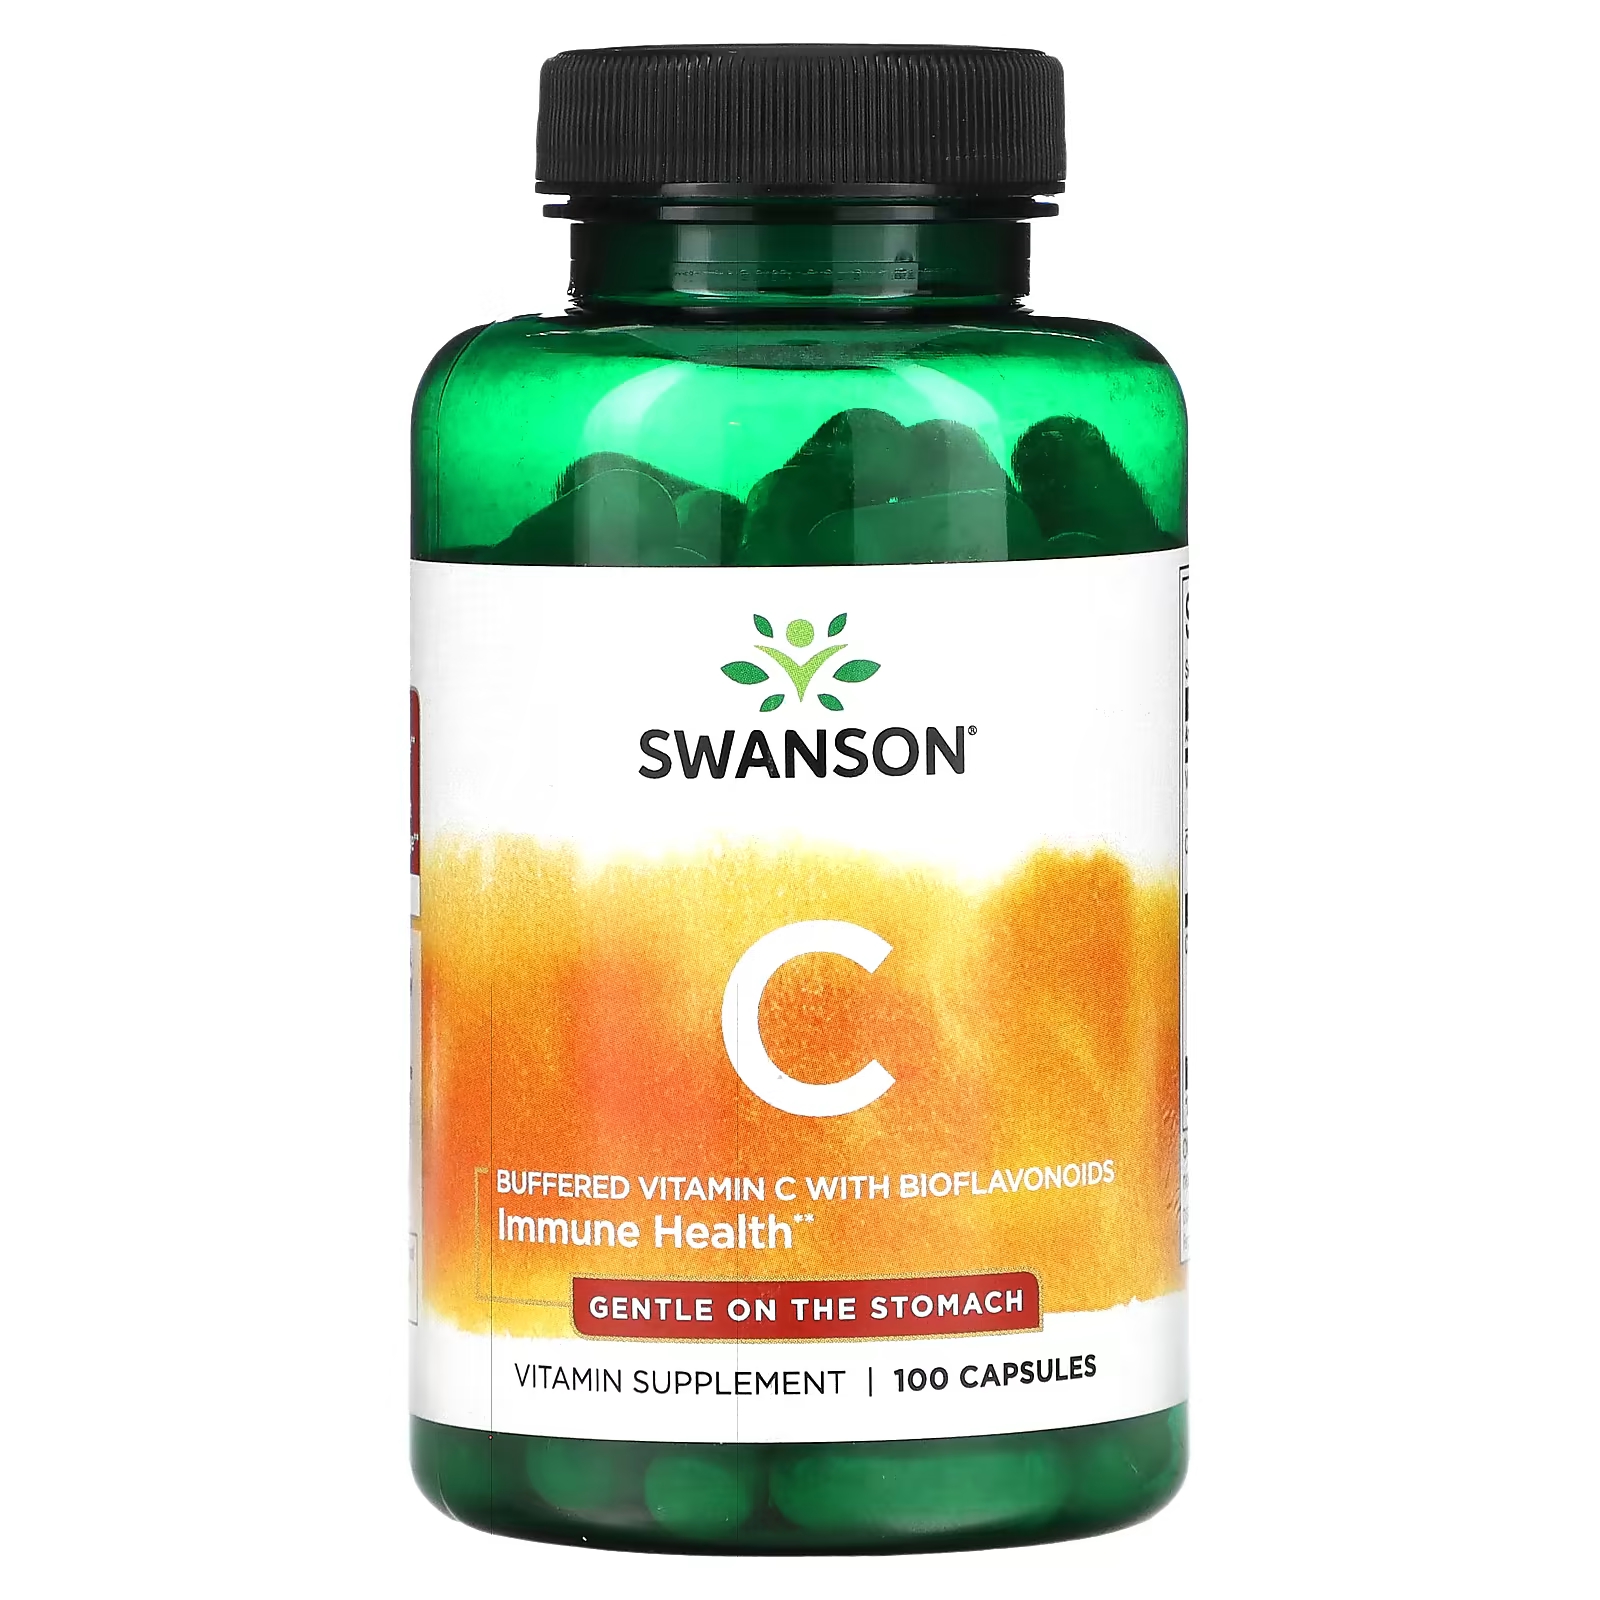 Витамин С Swanson буферизованный с биофлавоноидами, 100 капсул витамин с swanson буферизованный с биофлавоноидами 100 капсул